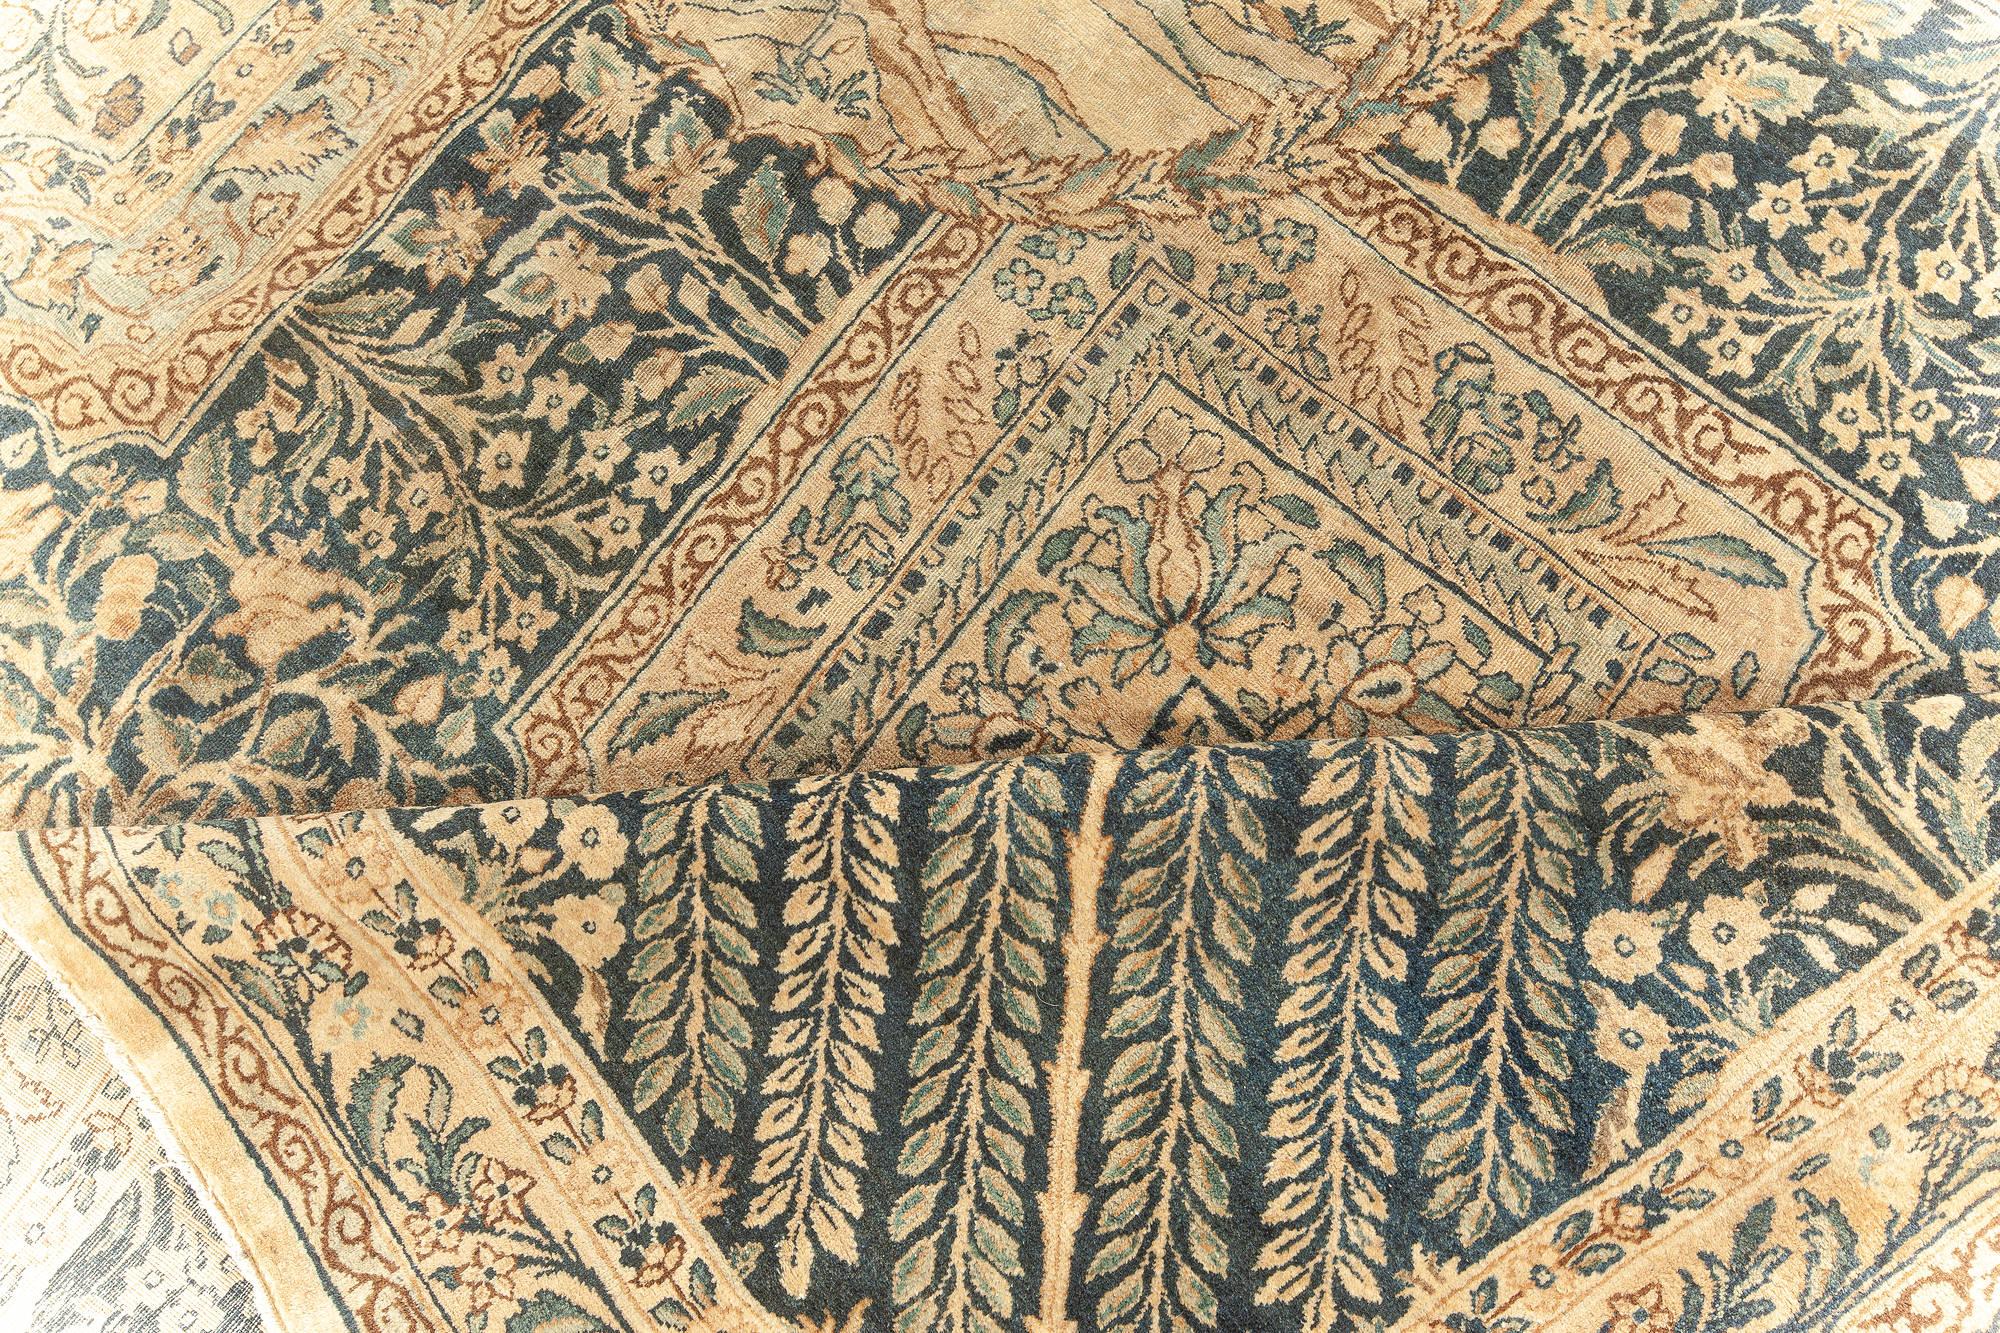 Fine Antique Persian Kirman handmade wool rug
Size: 11'9